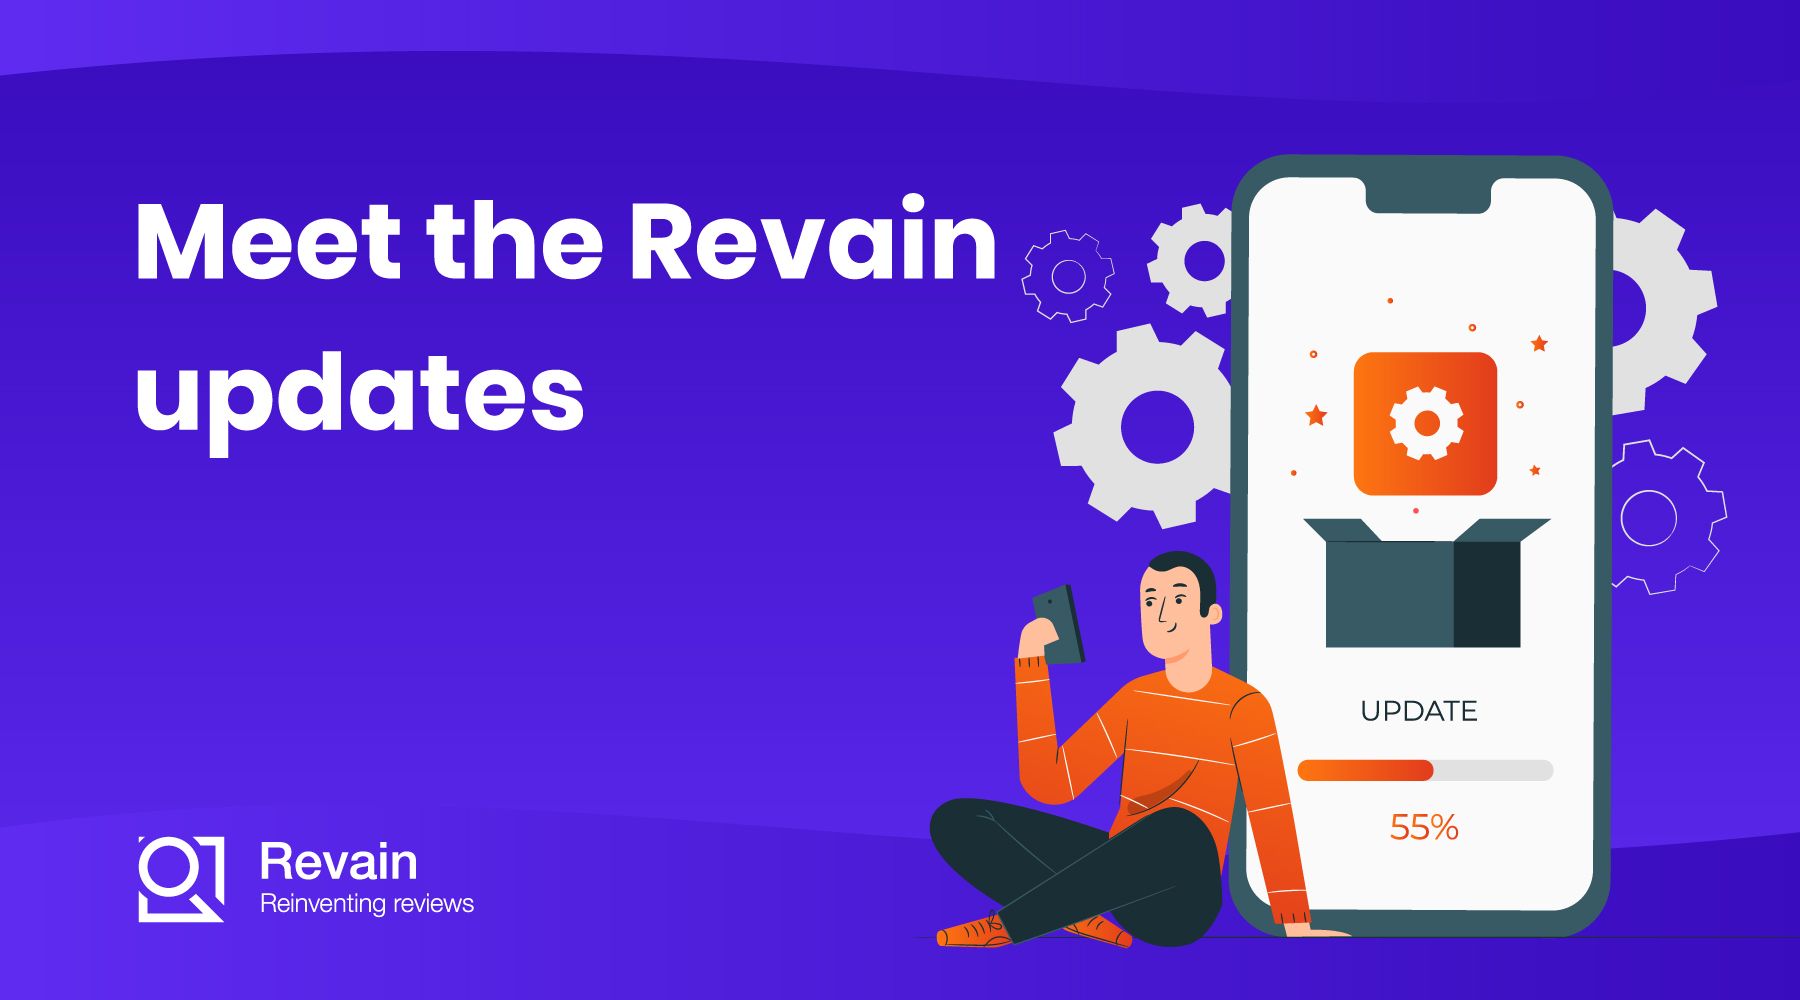 Meet the new Revain updates!